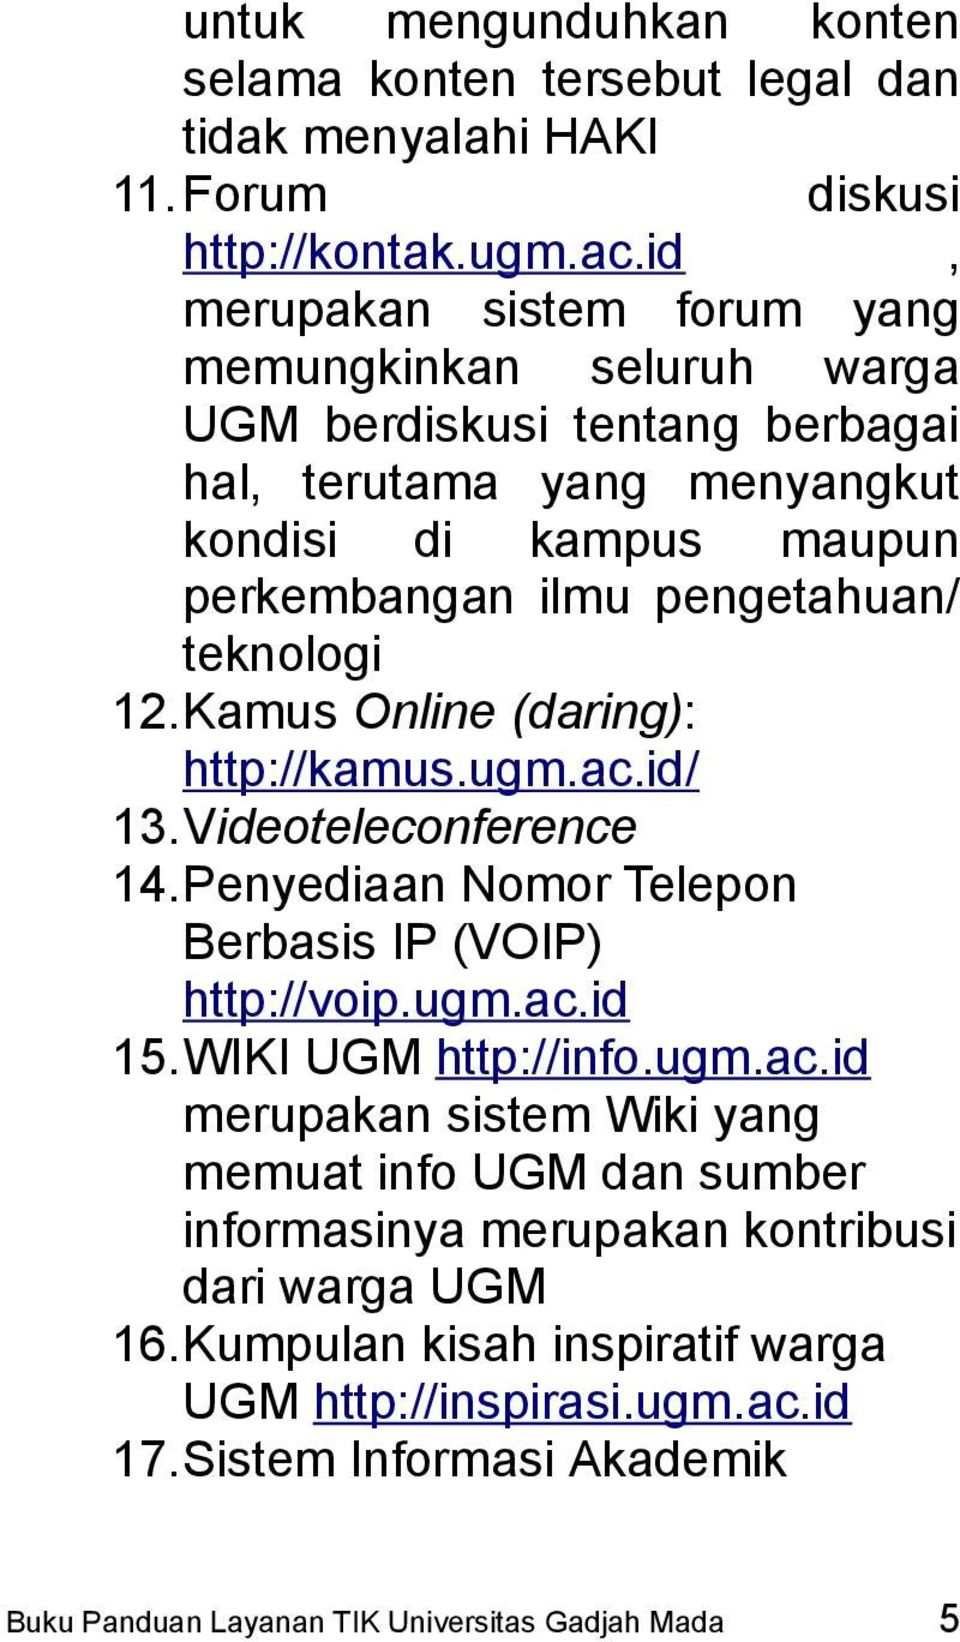 pengetahuan/ teknologi 12.Kamus Online (daring): http://kamus.ugm.ac.id/ 13.Videoteleconference 14.Penyediaan Nomor Telepon Berbasis IP (VOIP) http://voip.ugm.ac.id 15.